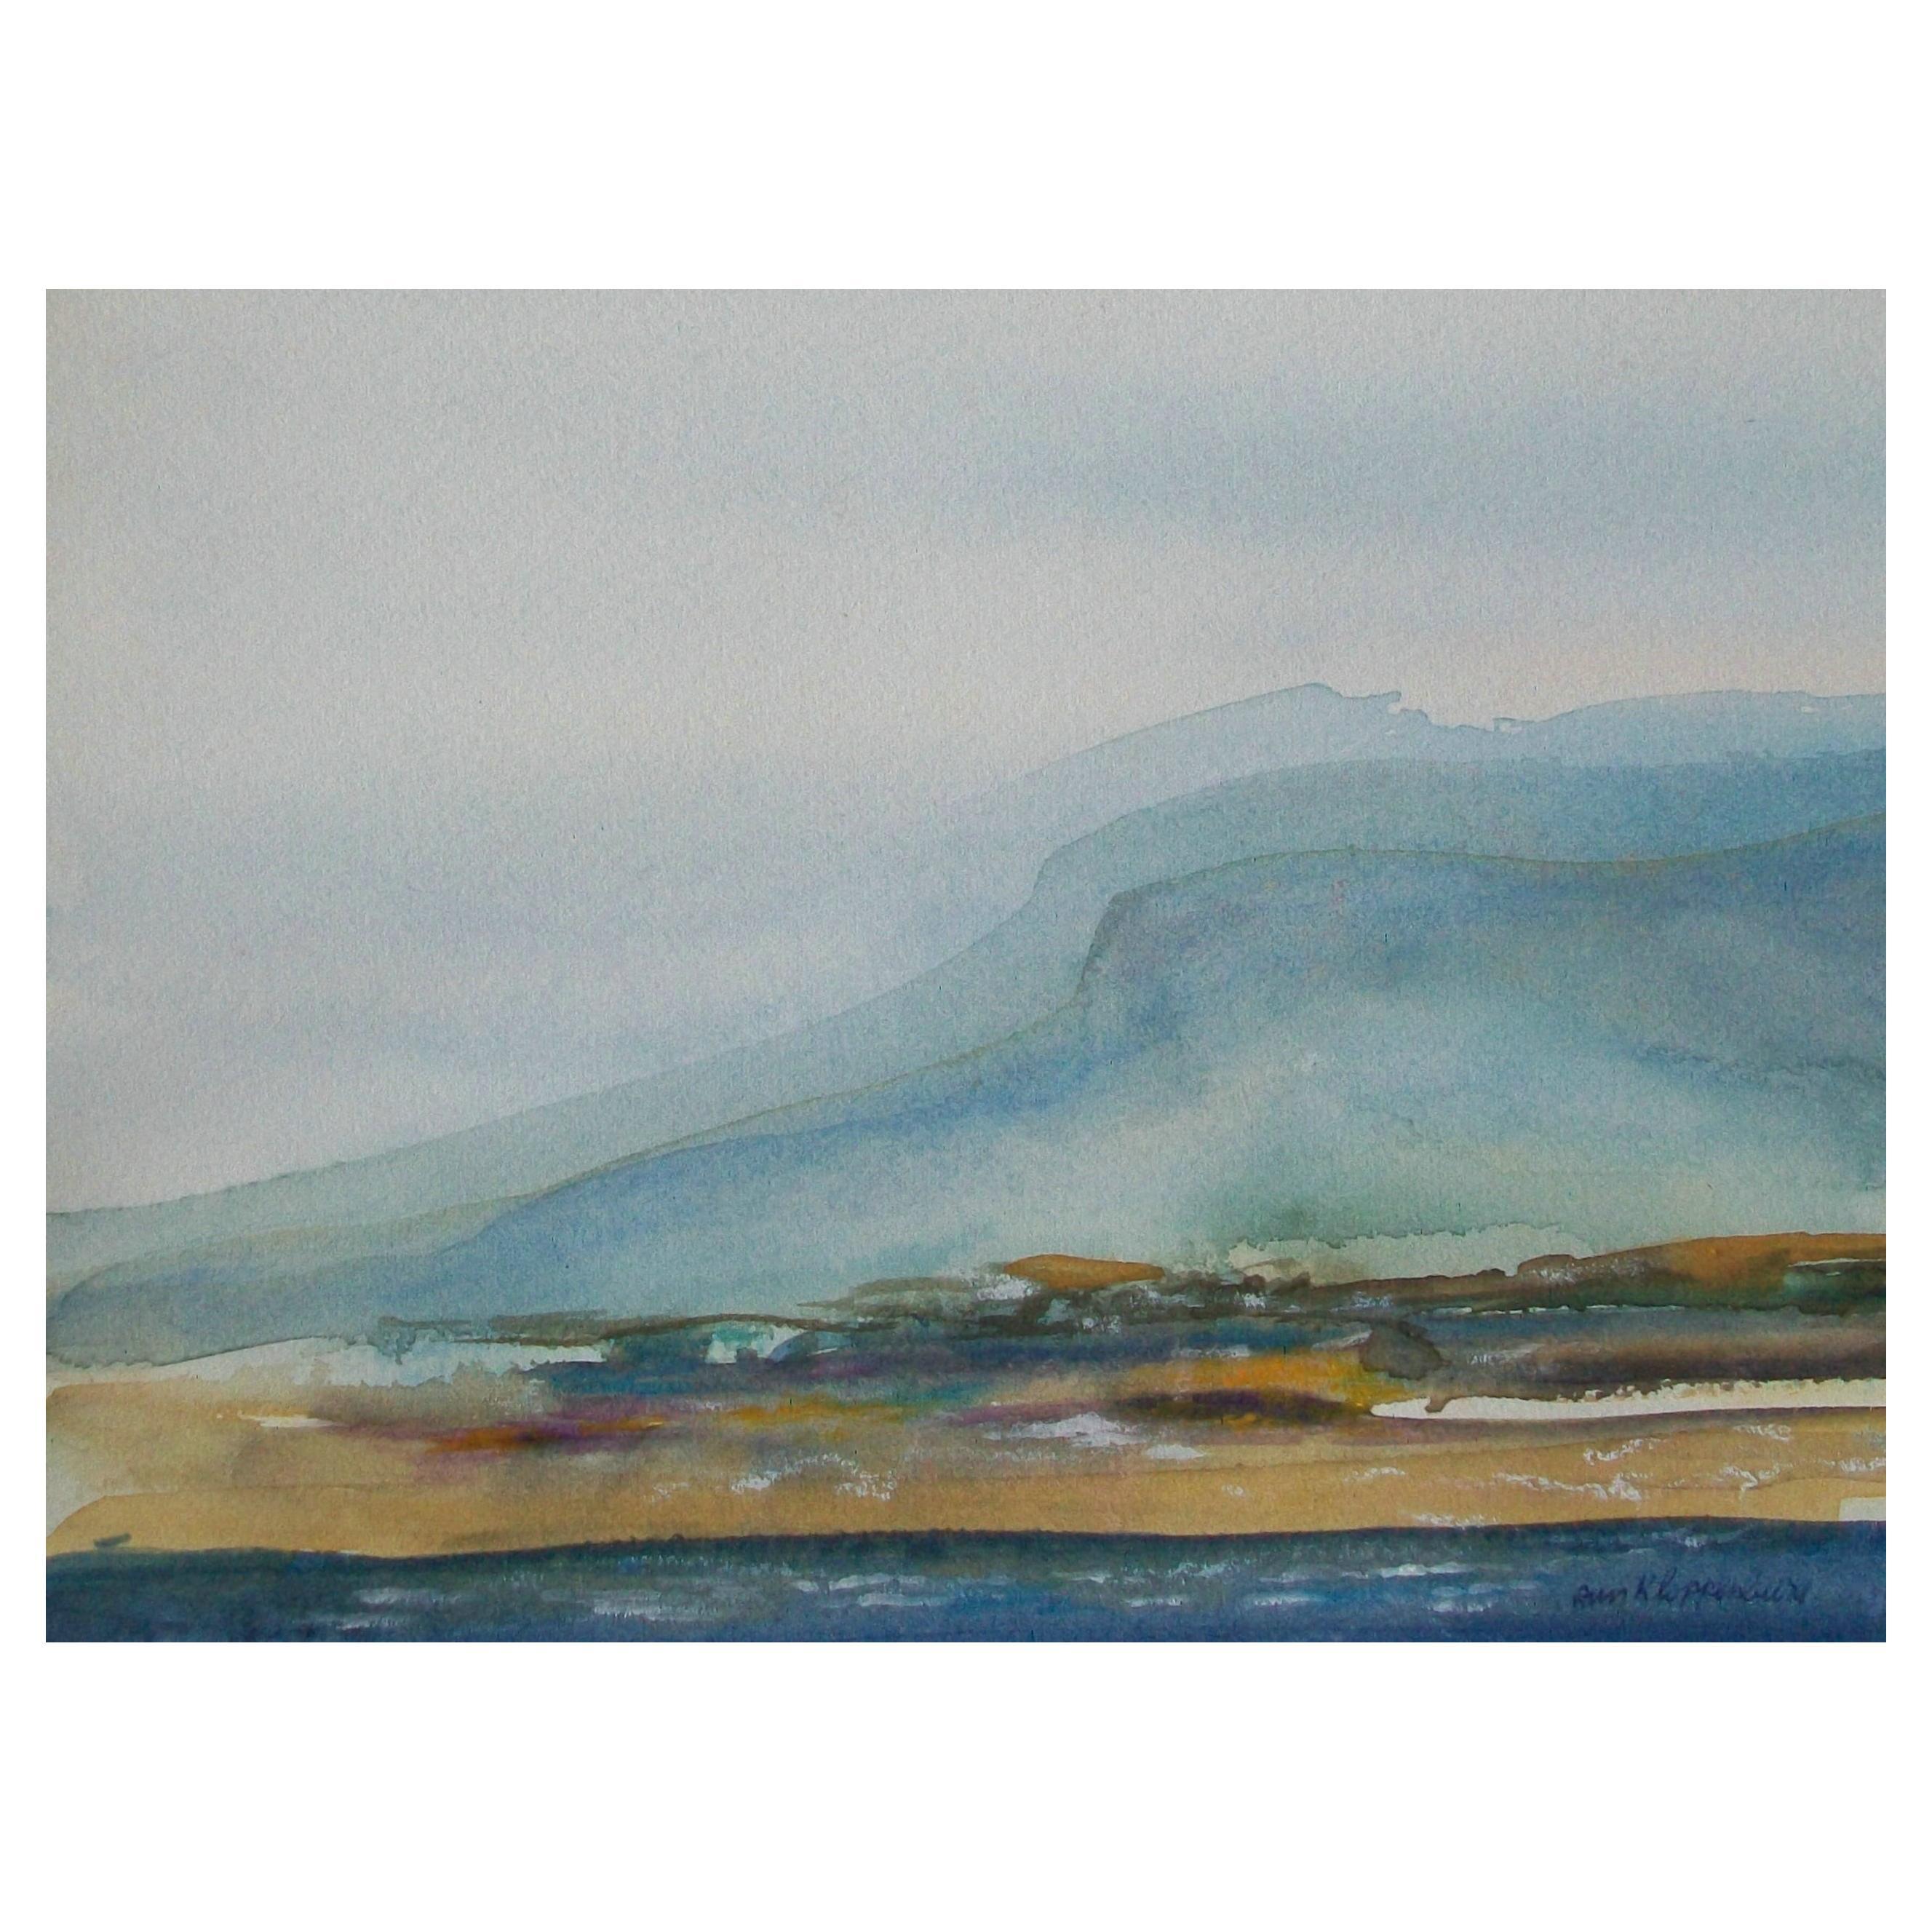 ANN KLOPPENBURG - 'Mullaghmore Beach' - Watercolor Painting - Canada - C. 1990's